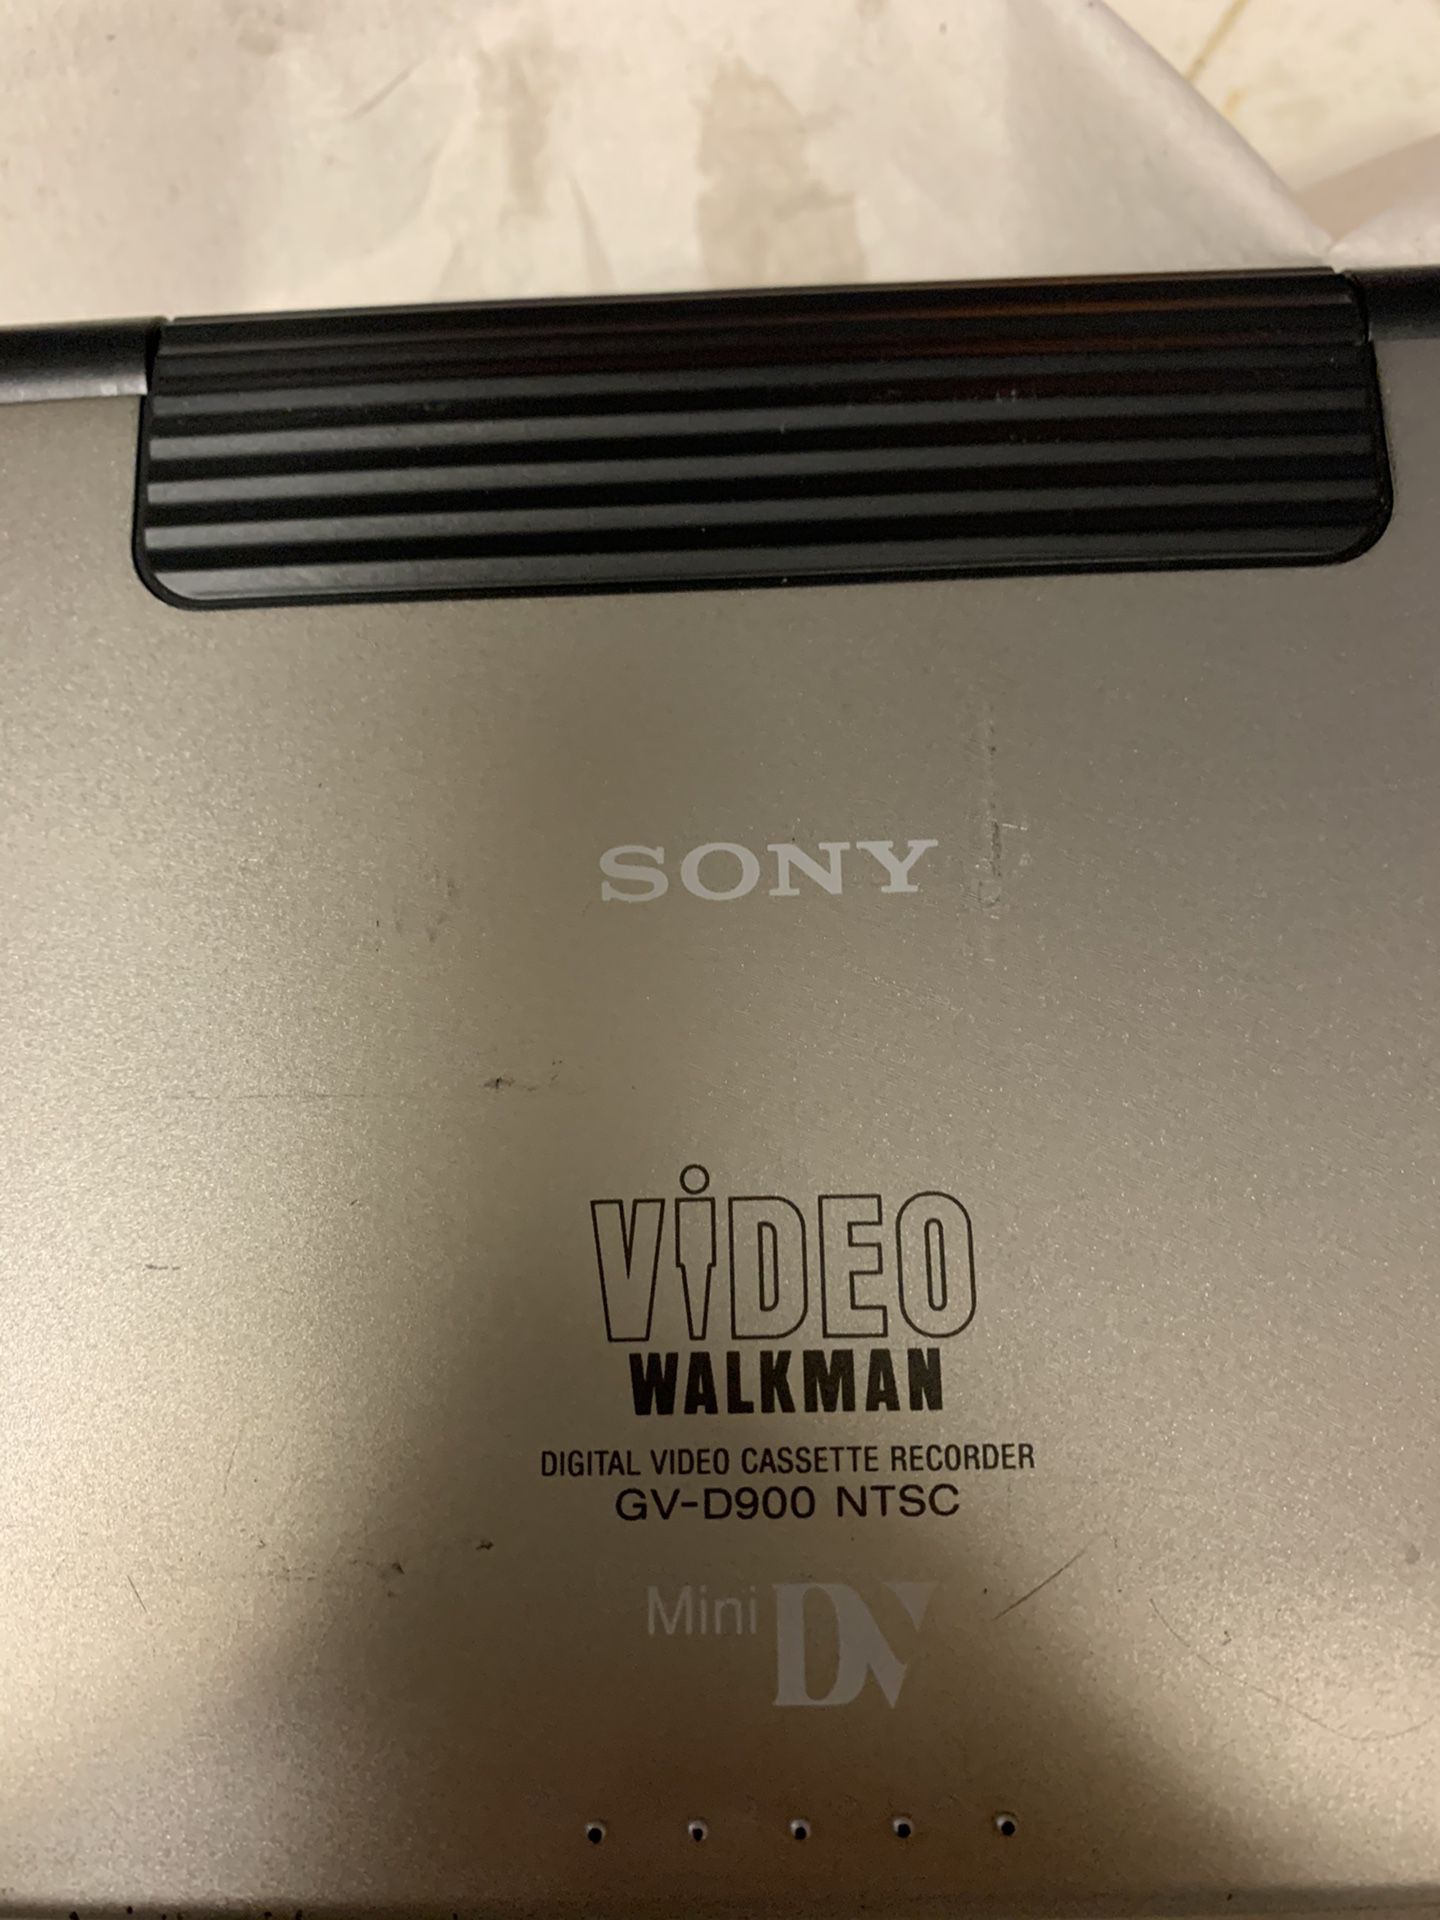 Sony Video Walkman GV-D900 NTSC